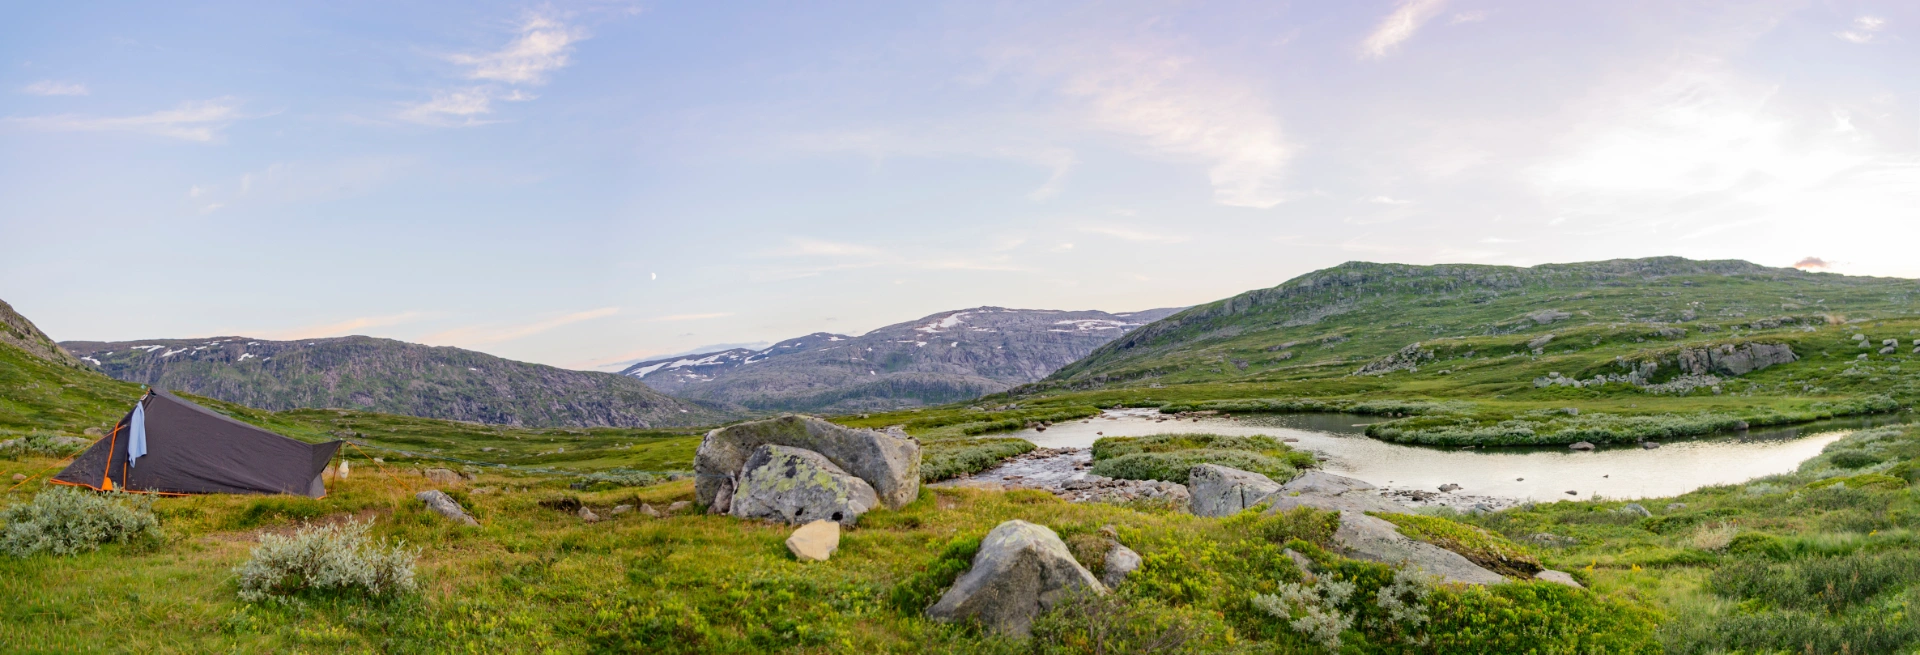 Teltur i Nord Norge